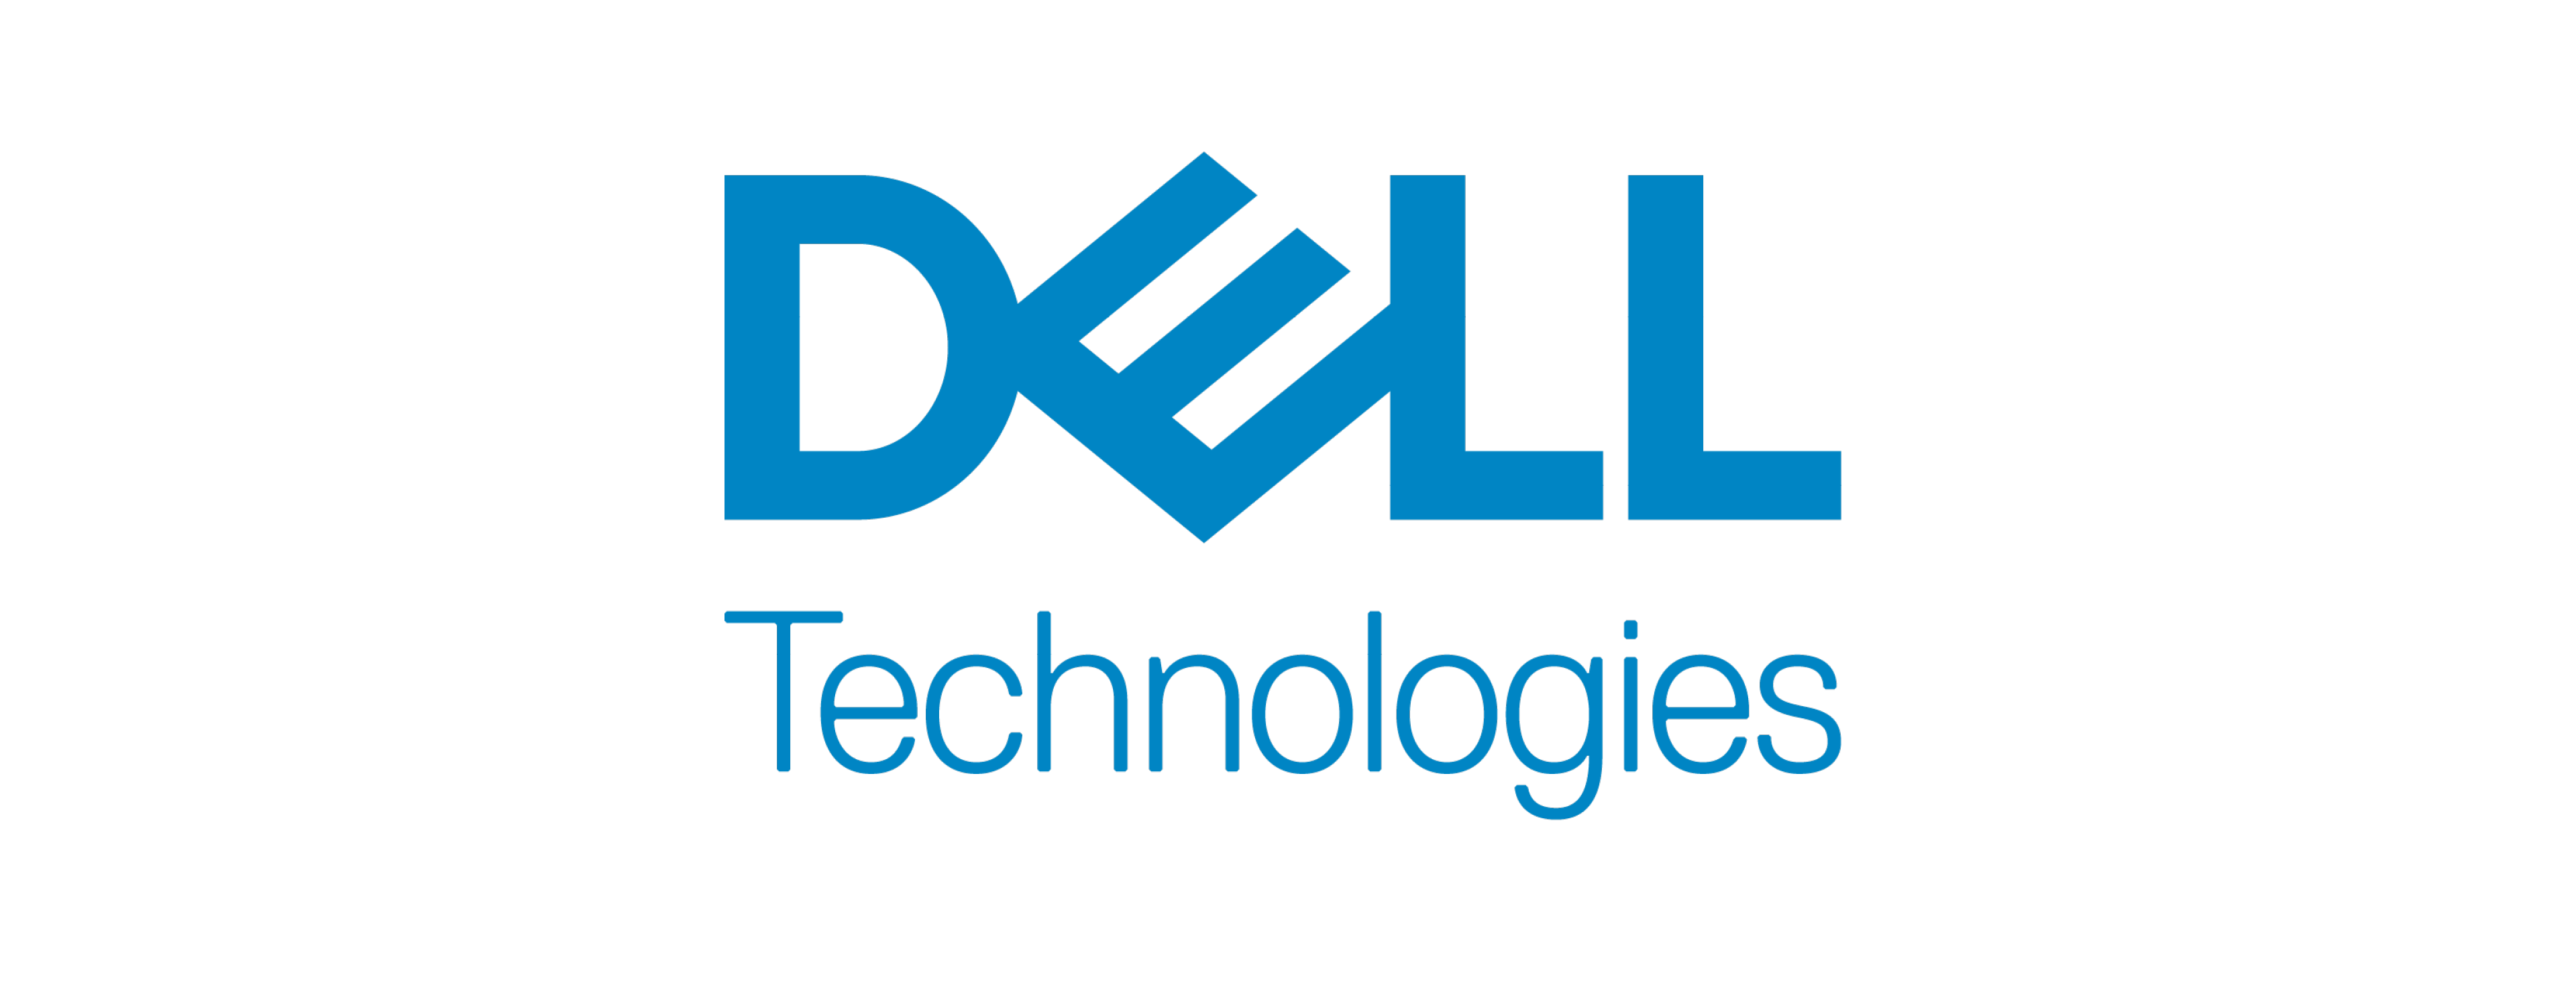 EY Dell logo